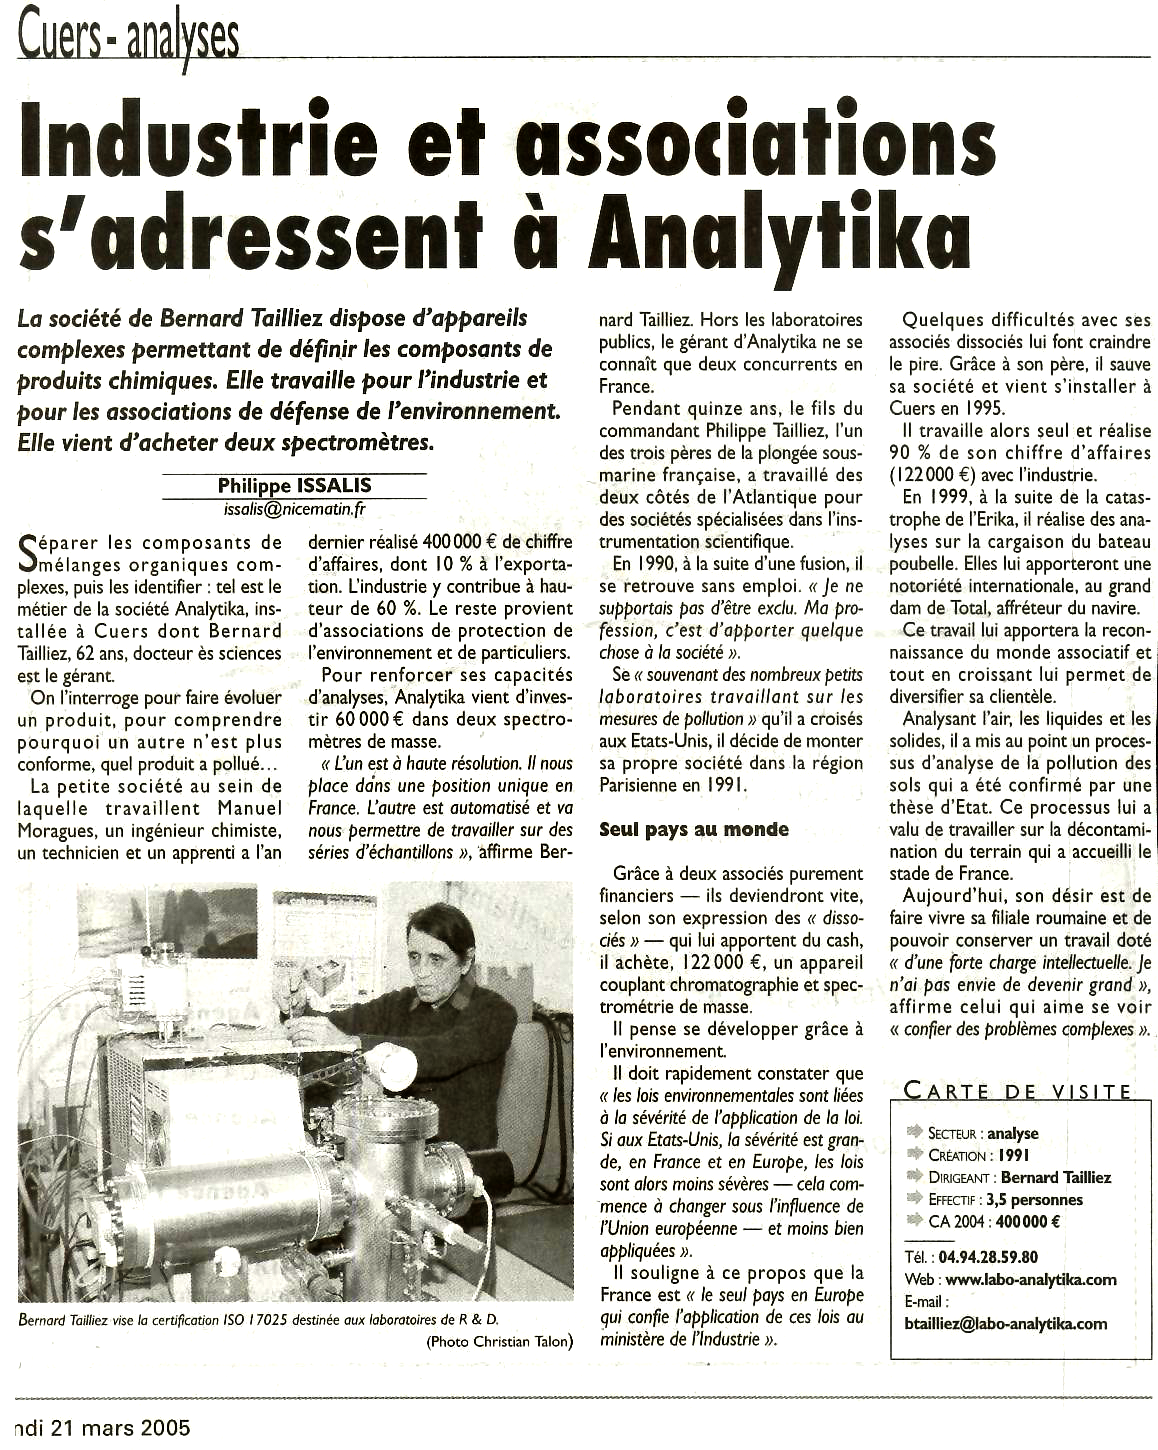 21.03.2005 > VAR MATIN : "Industries et associations s'adressent à Analytika"